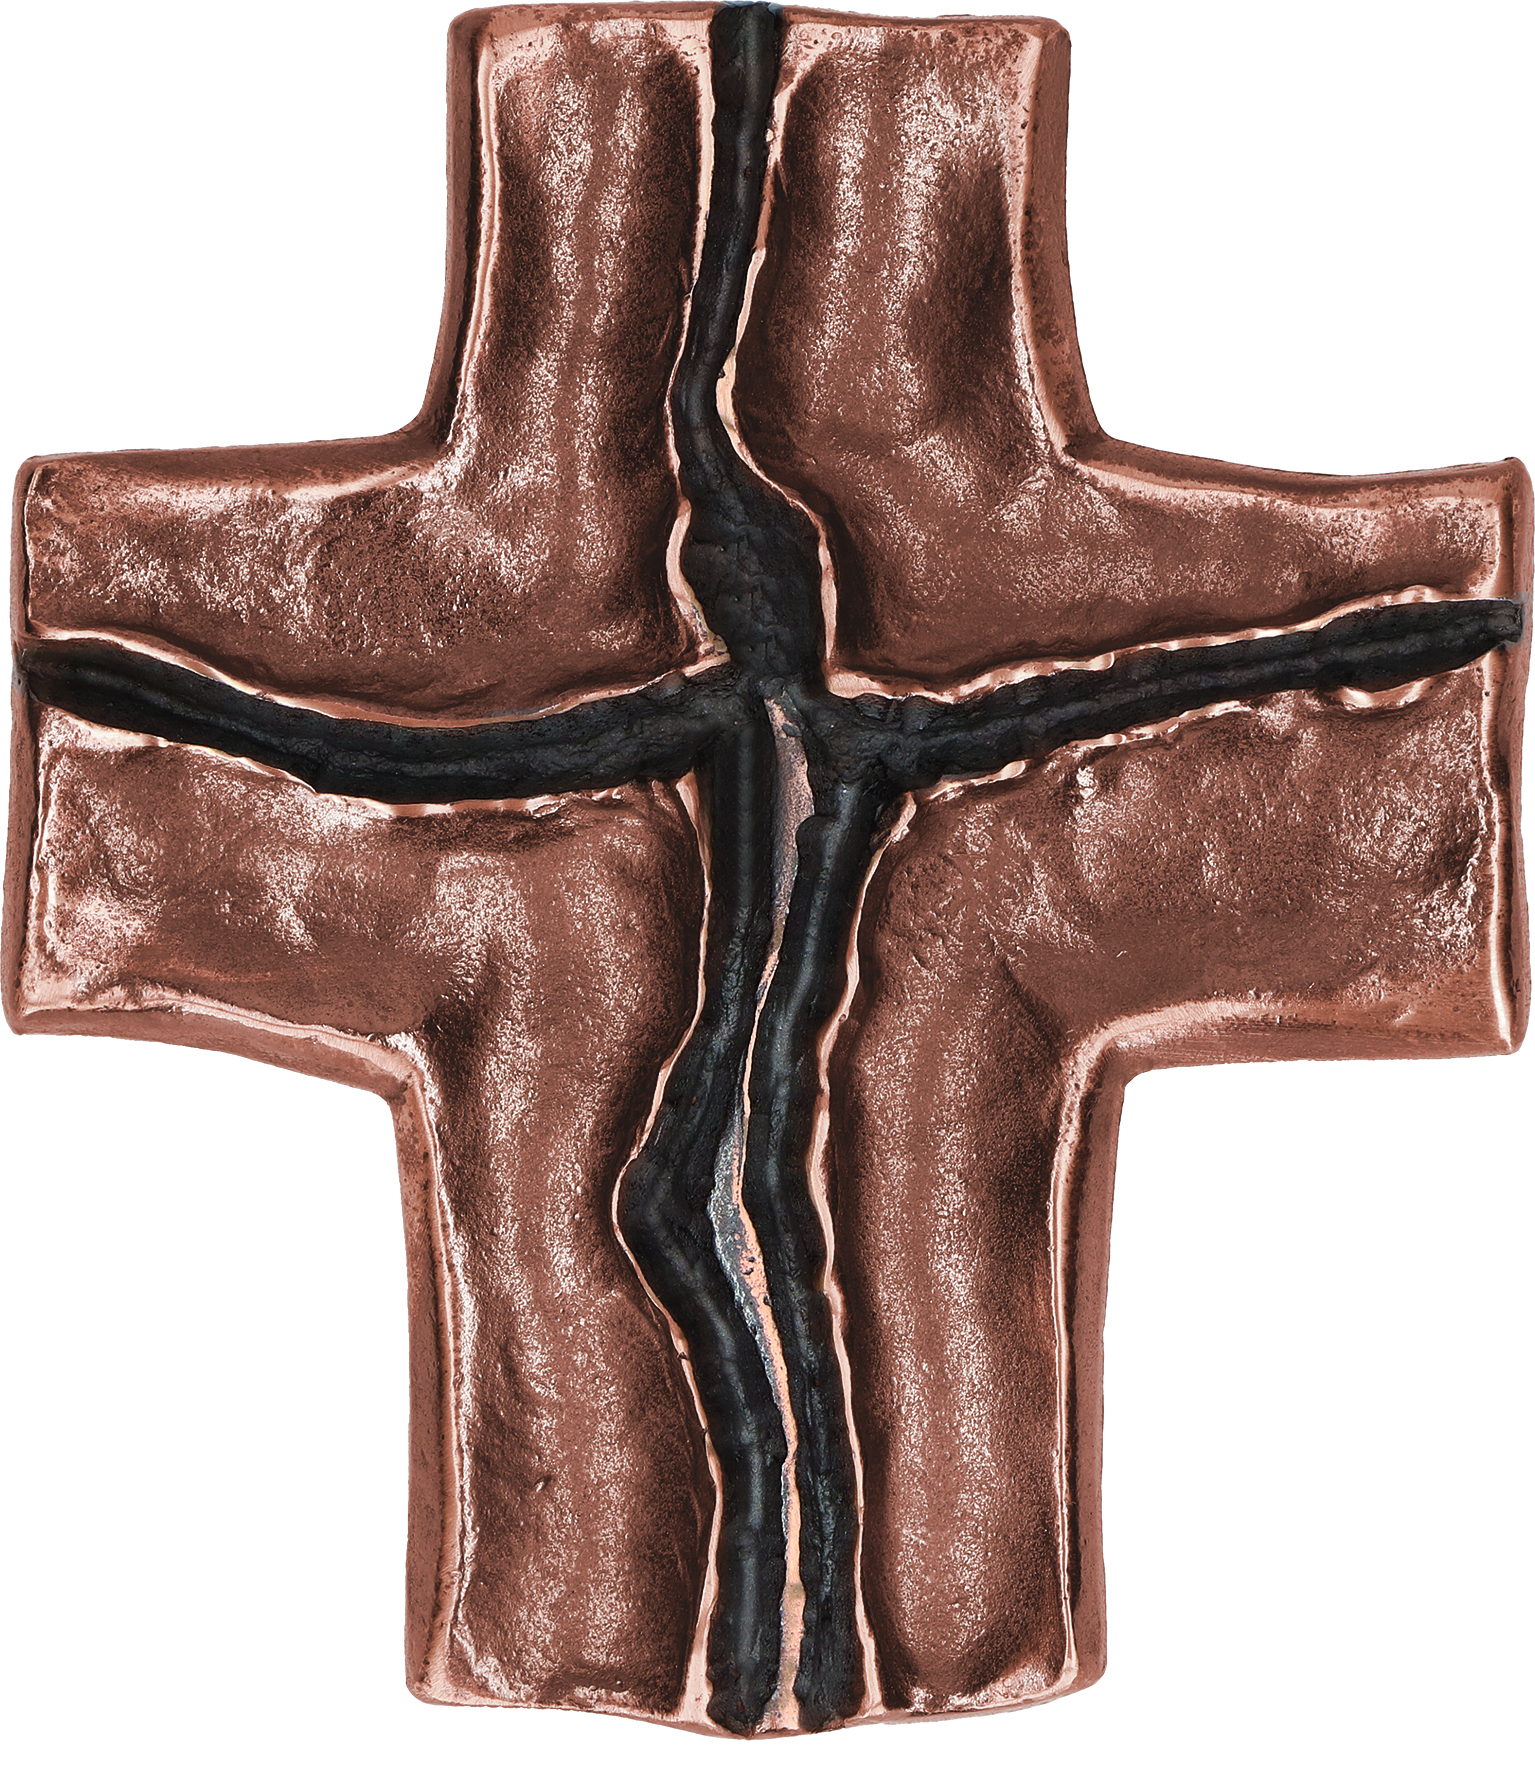 Schmuckkreuz "Jesus" aus Bronze